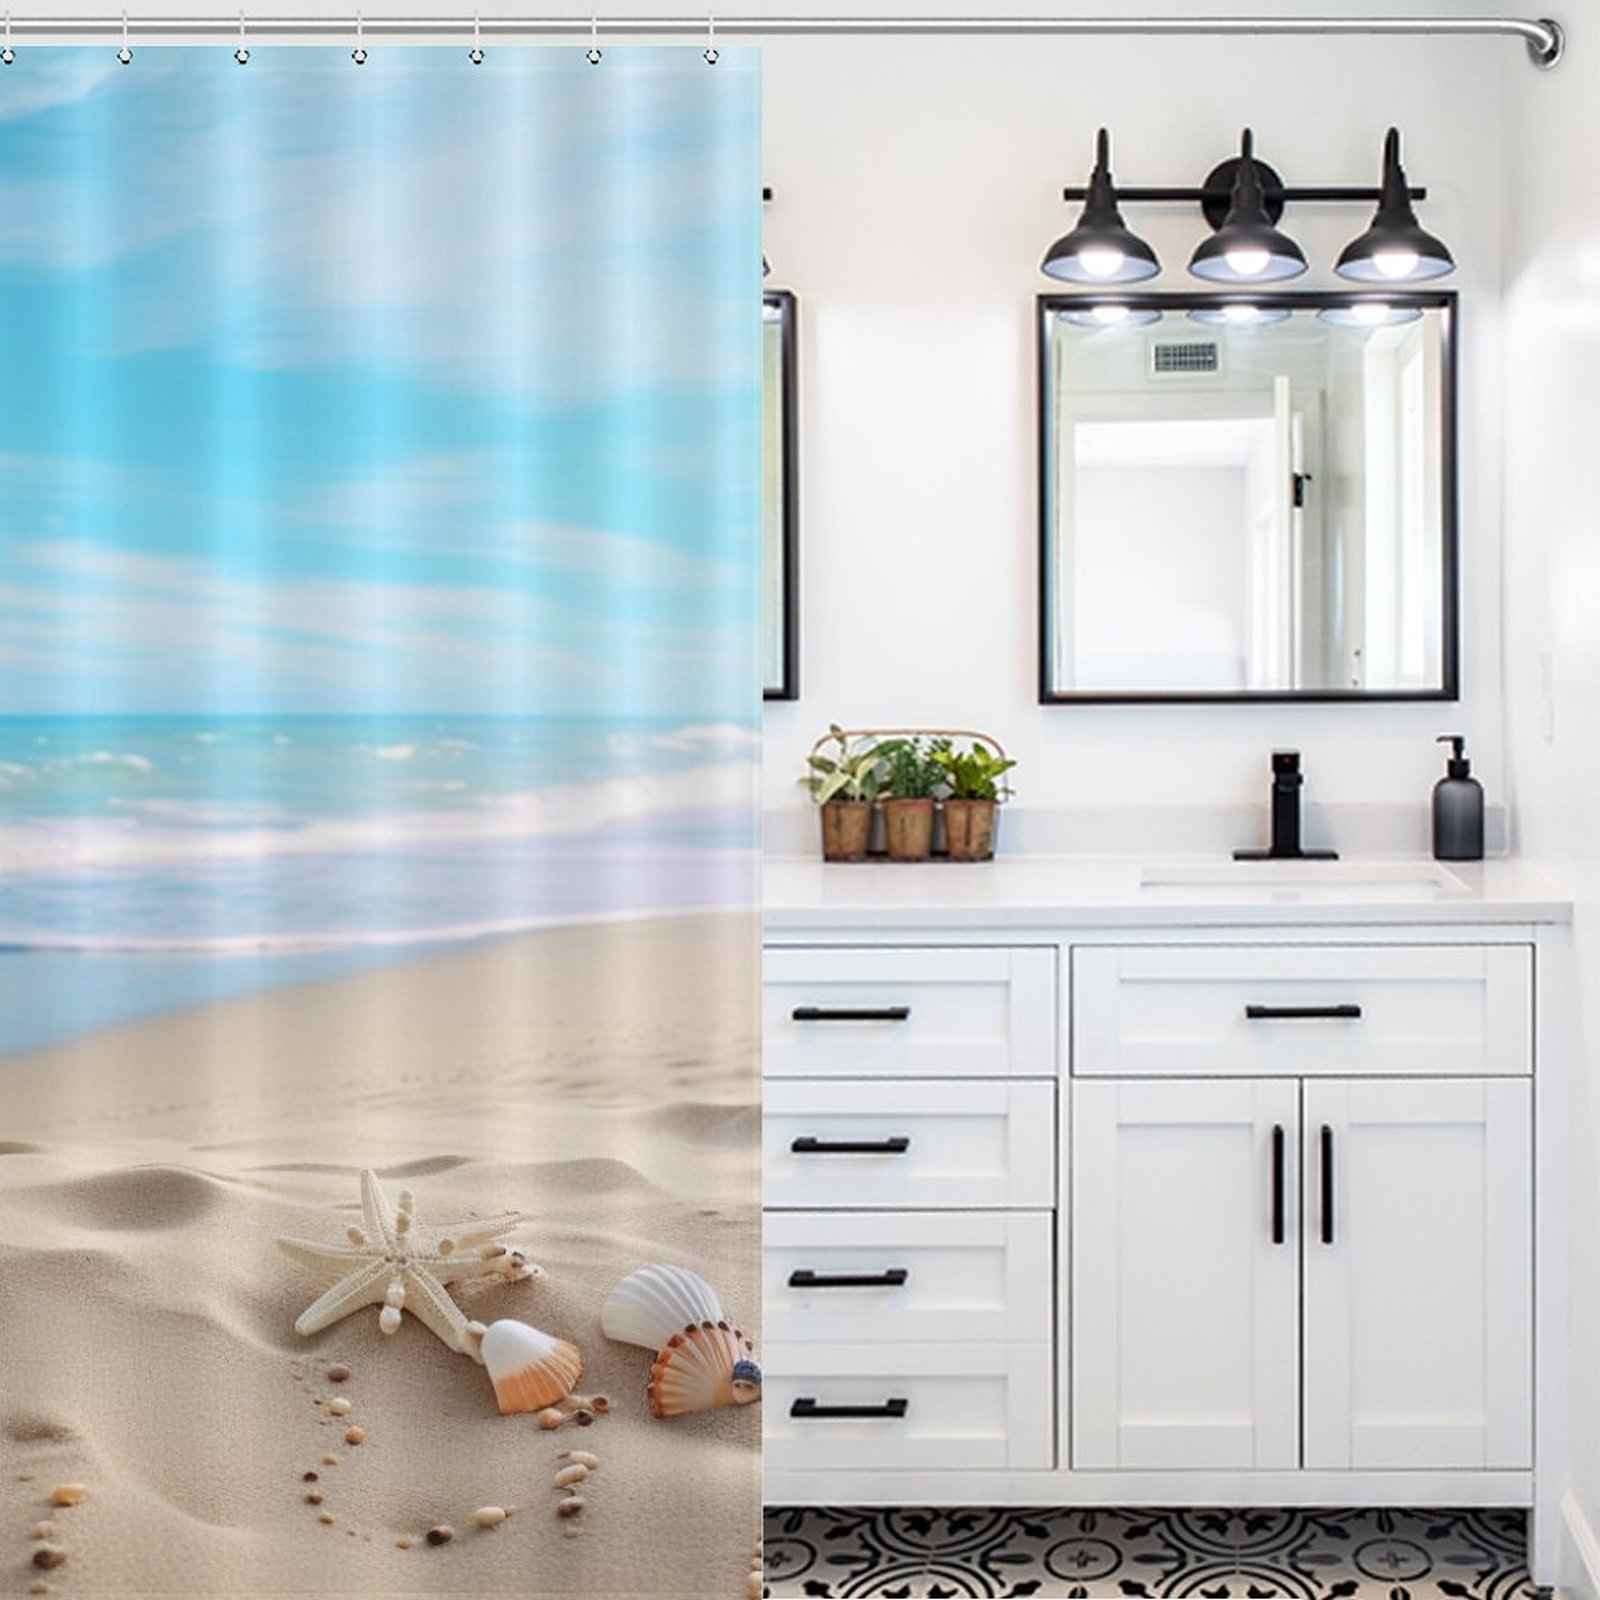 A bathroom with a Ocean Beach Starfish Seashell Shower Curtain from Cotton Cat.